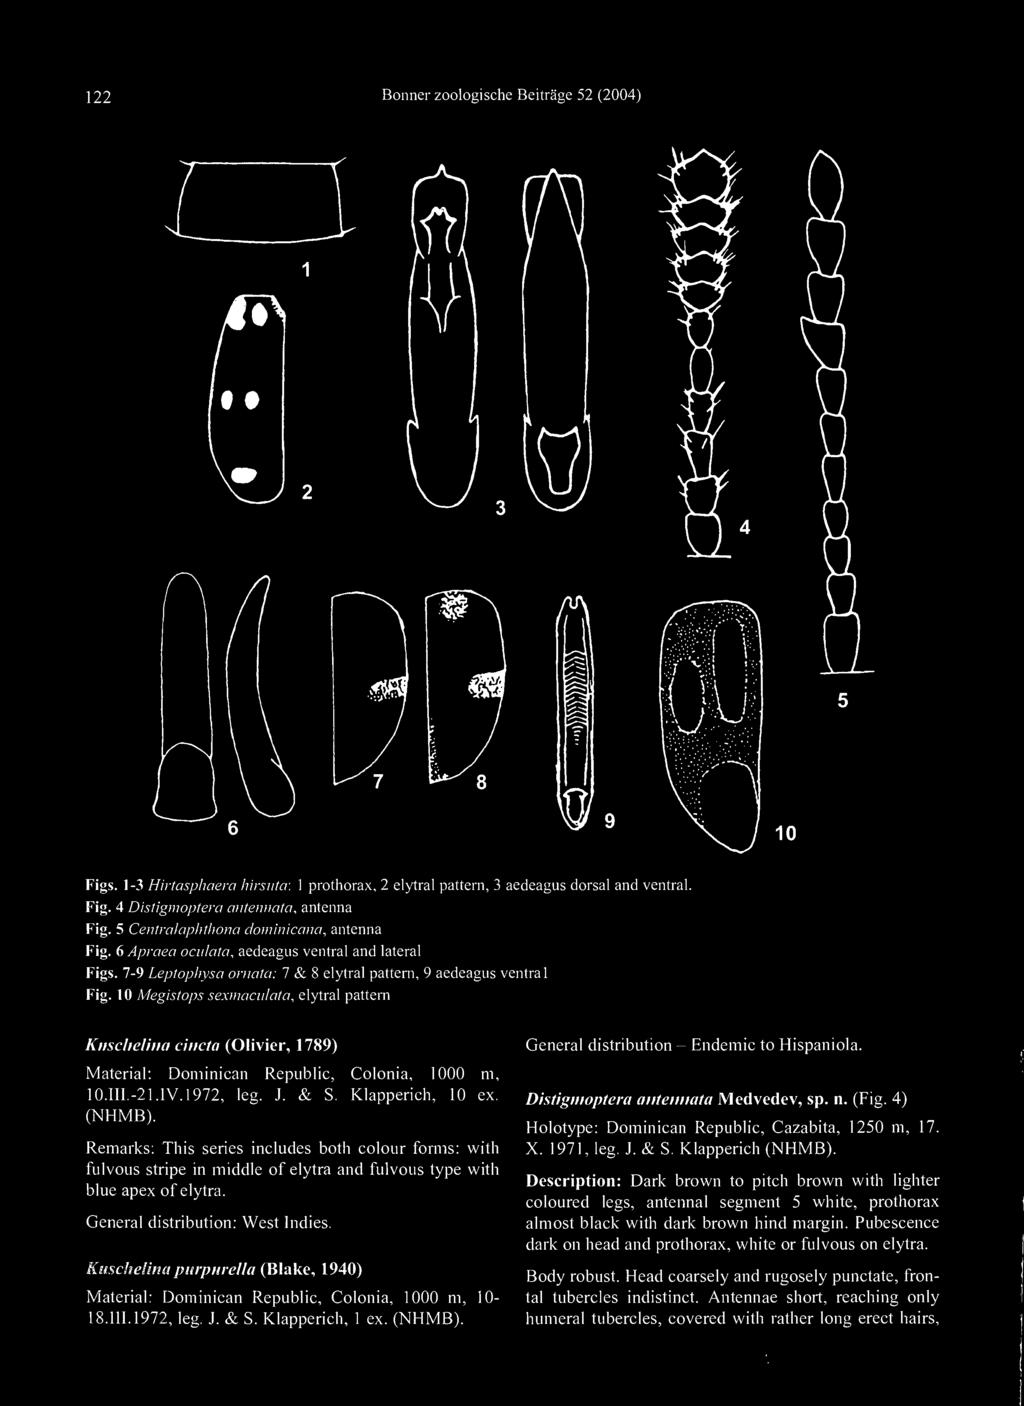 Kuscbelina purpurella (Blake, 1940) Material: Dominican Republic, Colonia, 1000 m, 10-18.111.1972, leg. J. & S. Klapperich, 1 ex. Distigmoptera antennata Medvedev, sp. n. (Fig.